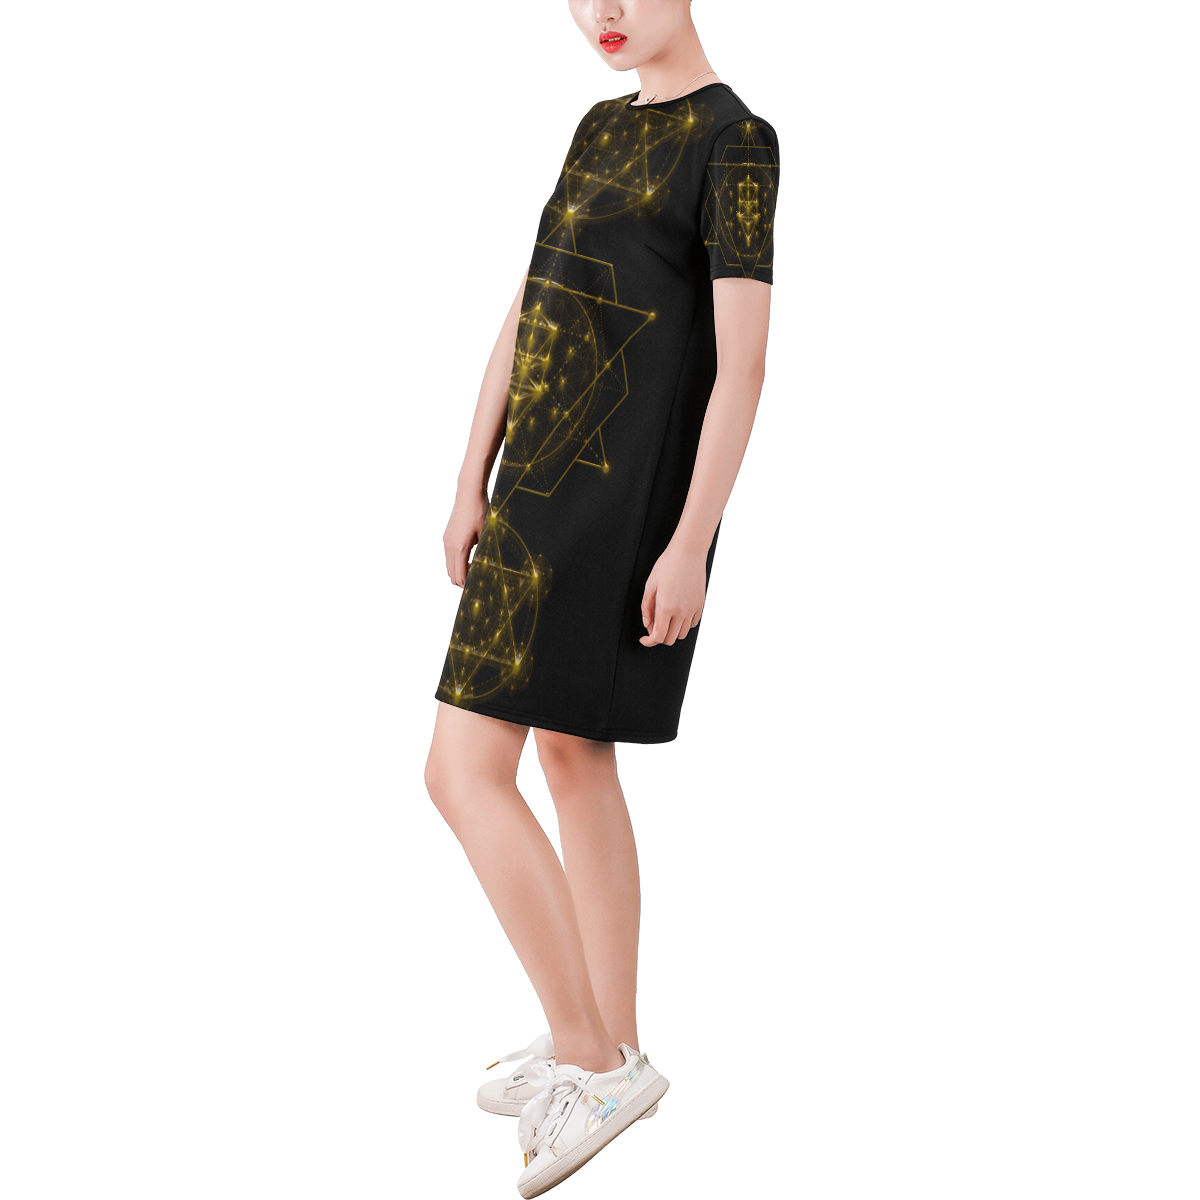 Sacred Geometry Short-Sleeve Round Neck A-Line Dress (Model D47)